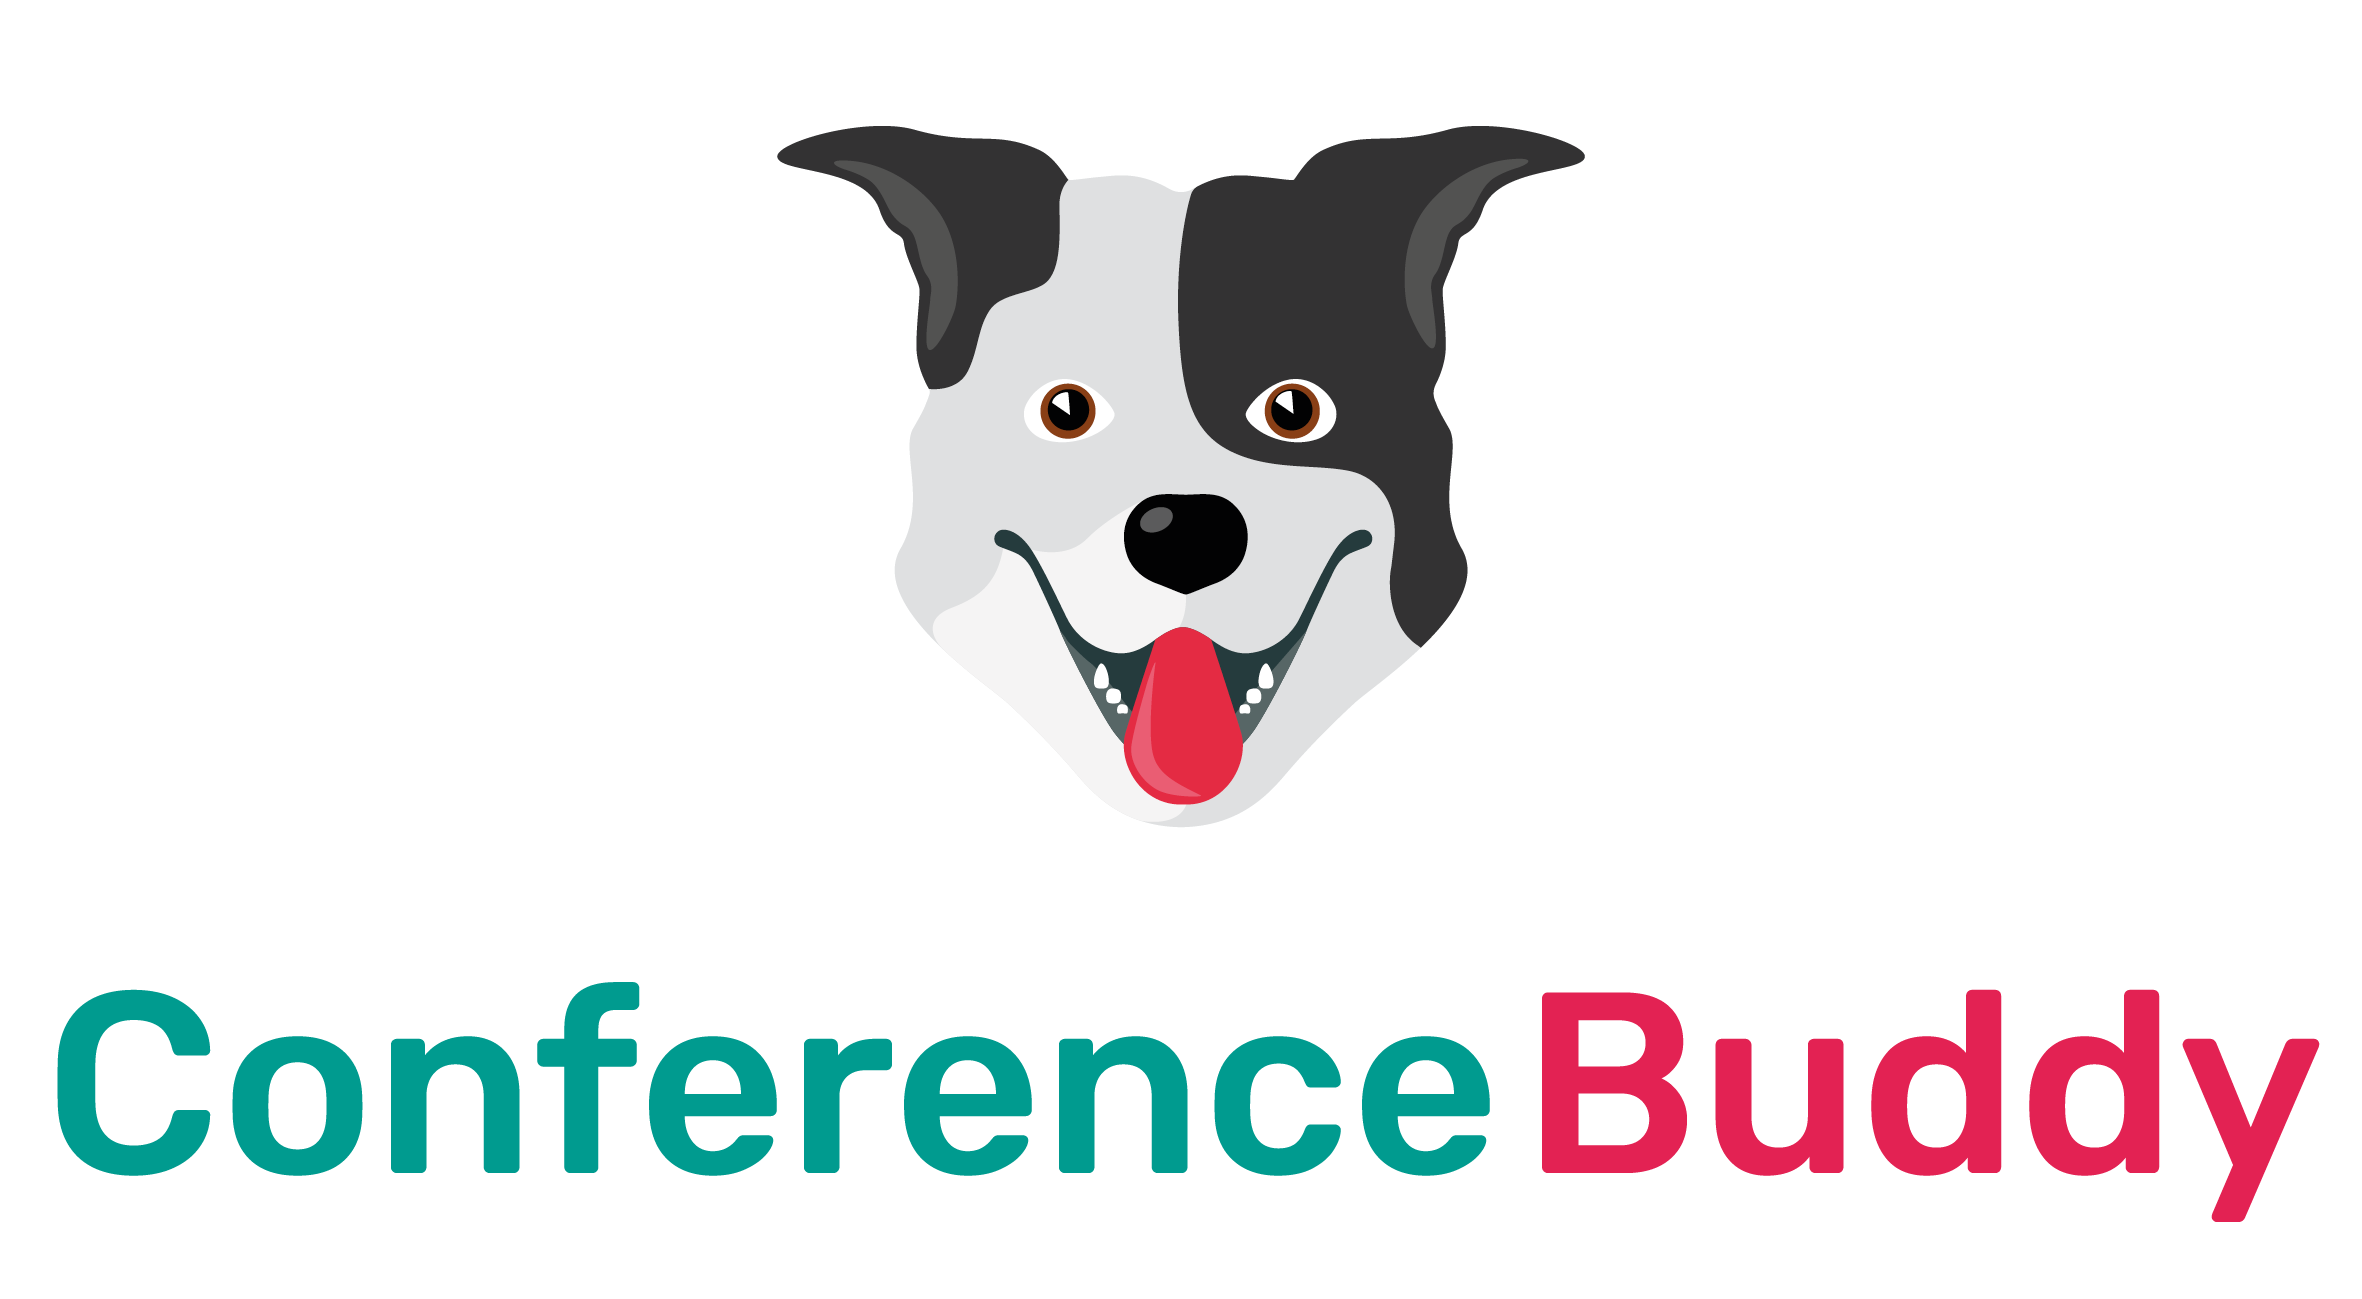 Conference Buddy logo